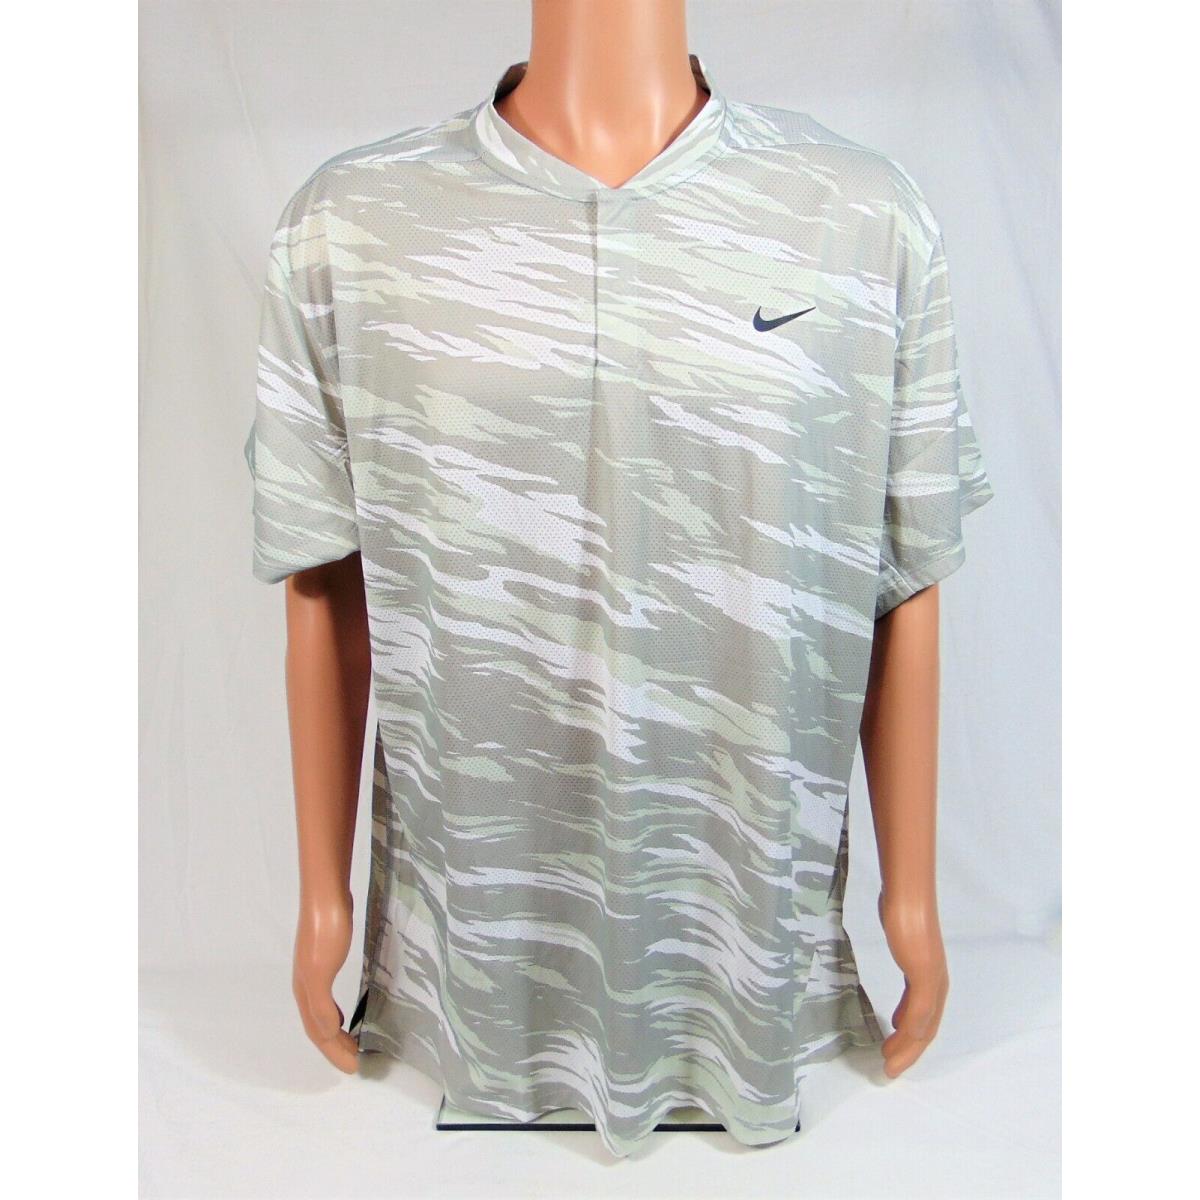 Nike TW Tiger Woods Dri Fit Adv Blade Polo Golf Shirt Sz Xxl DA3072 100 Rare